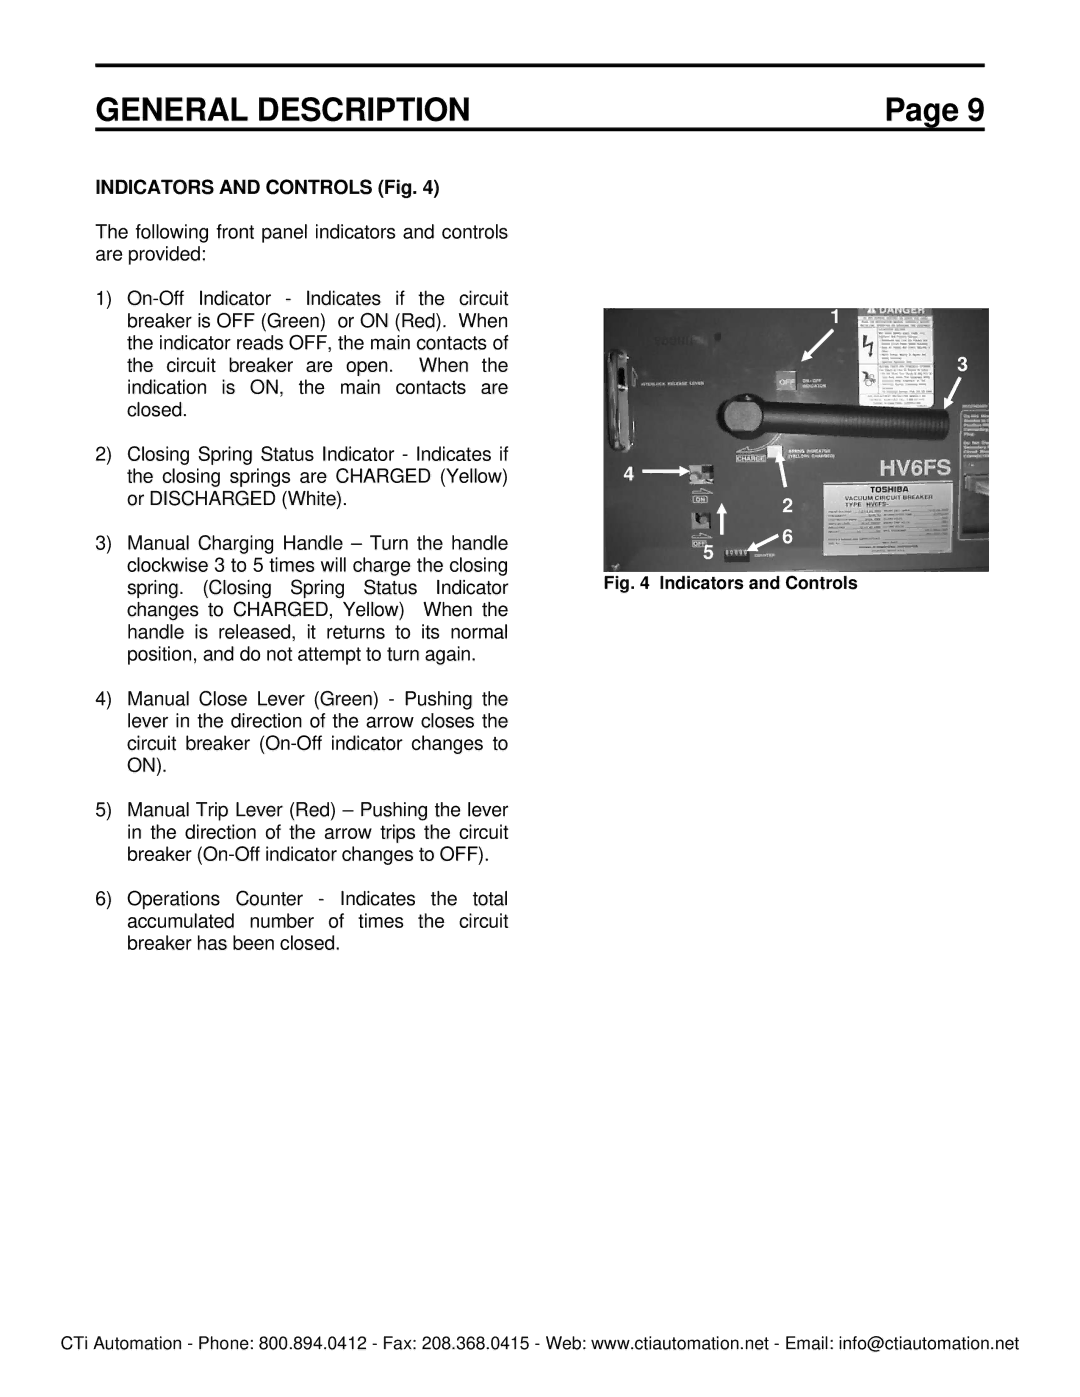 Toshiba HV6FS-MLD instruction manual Indicators and Controls Fig 